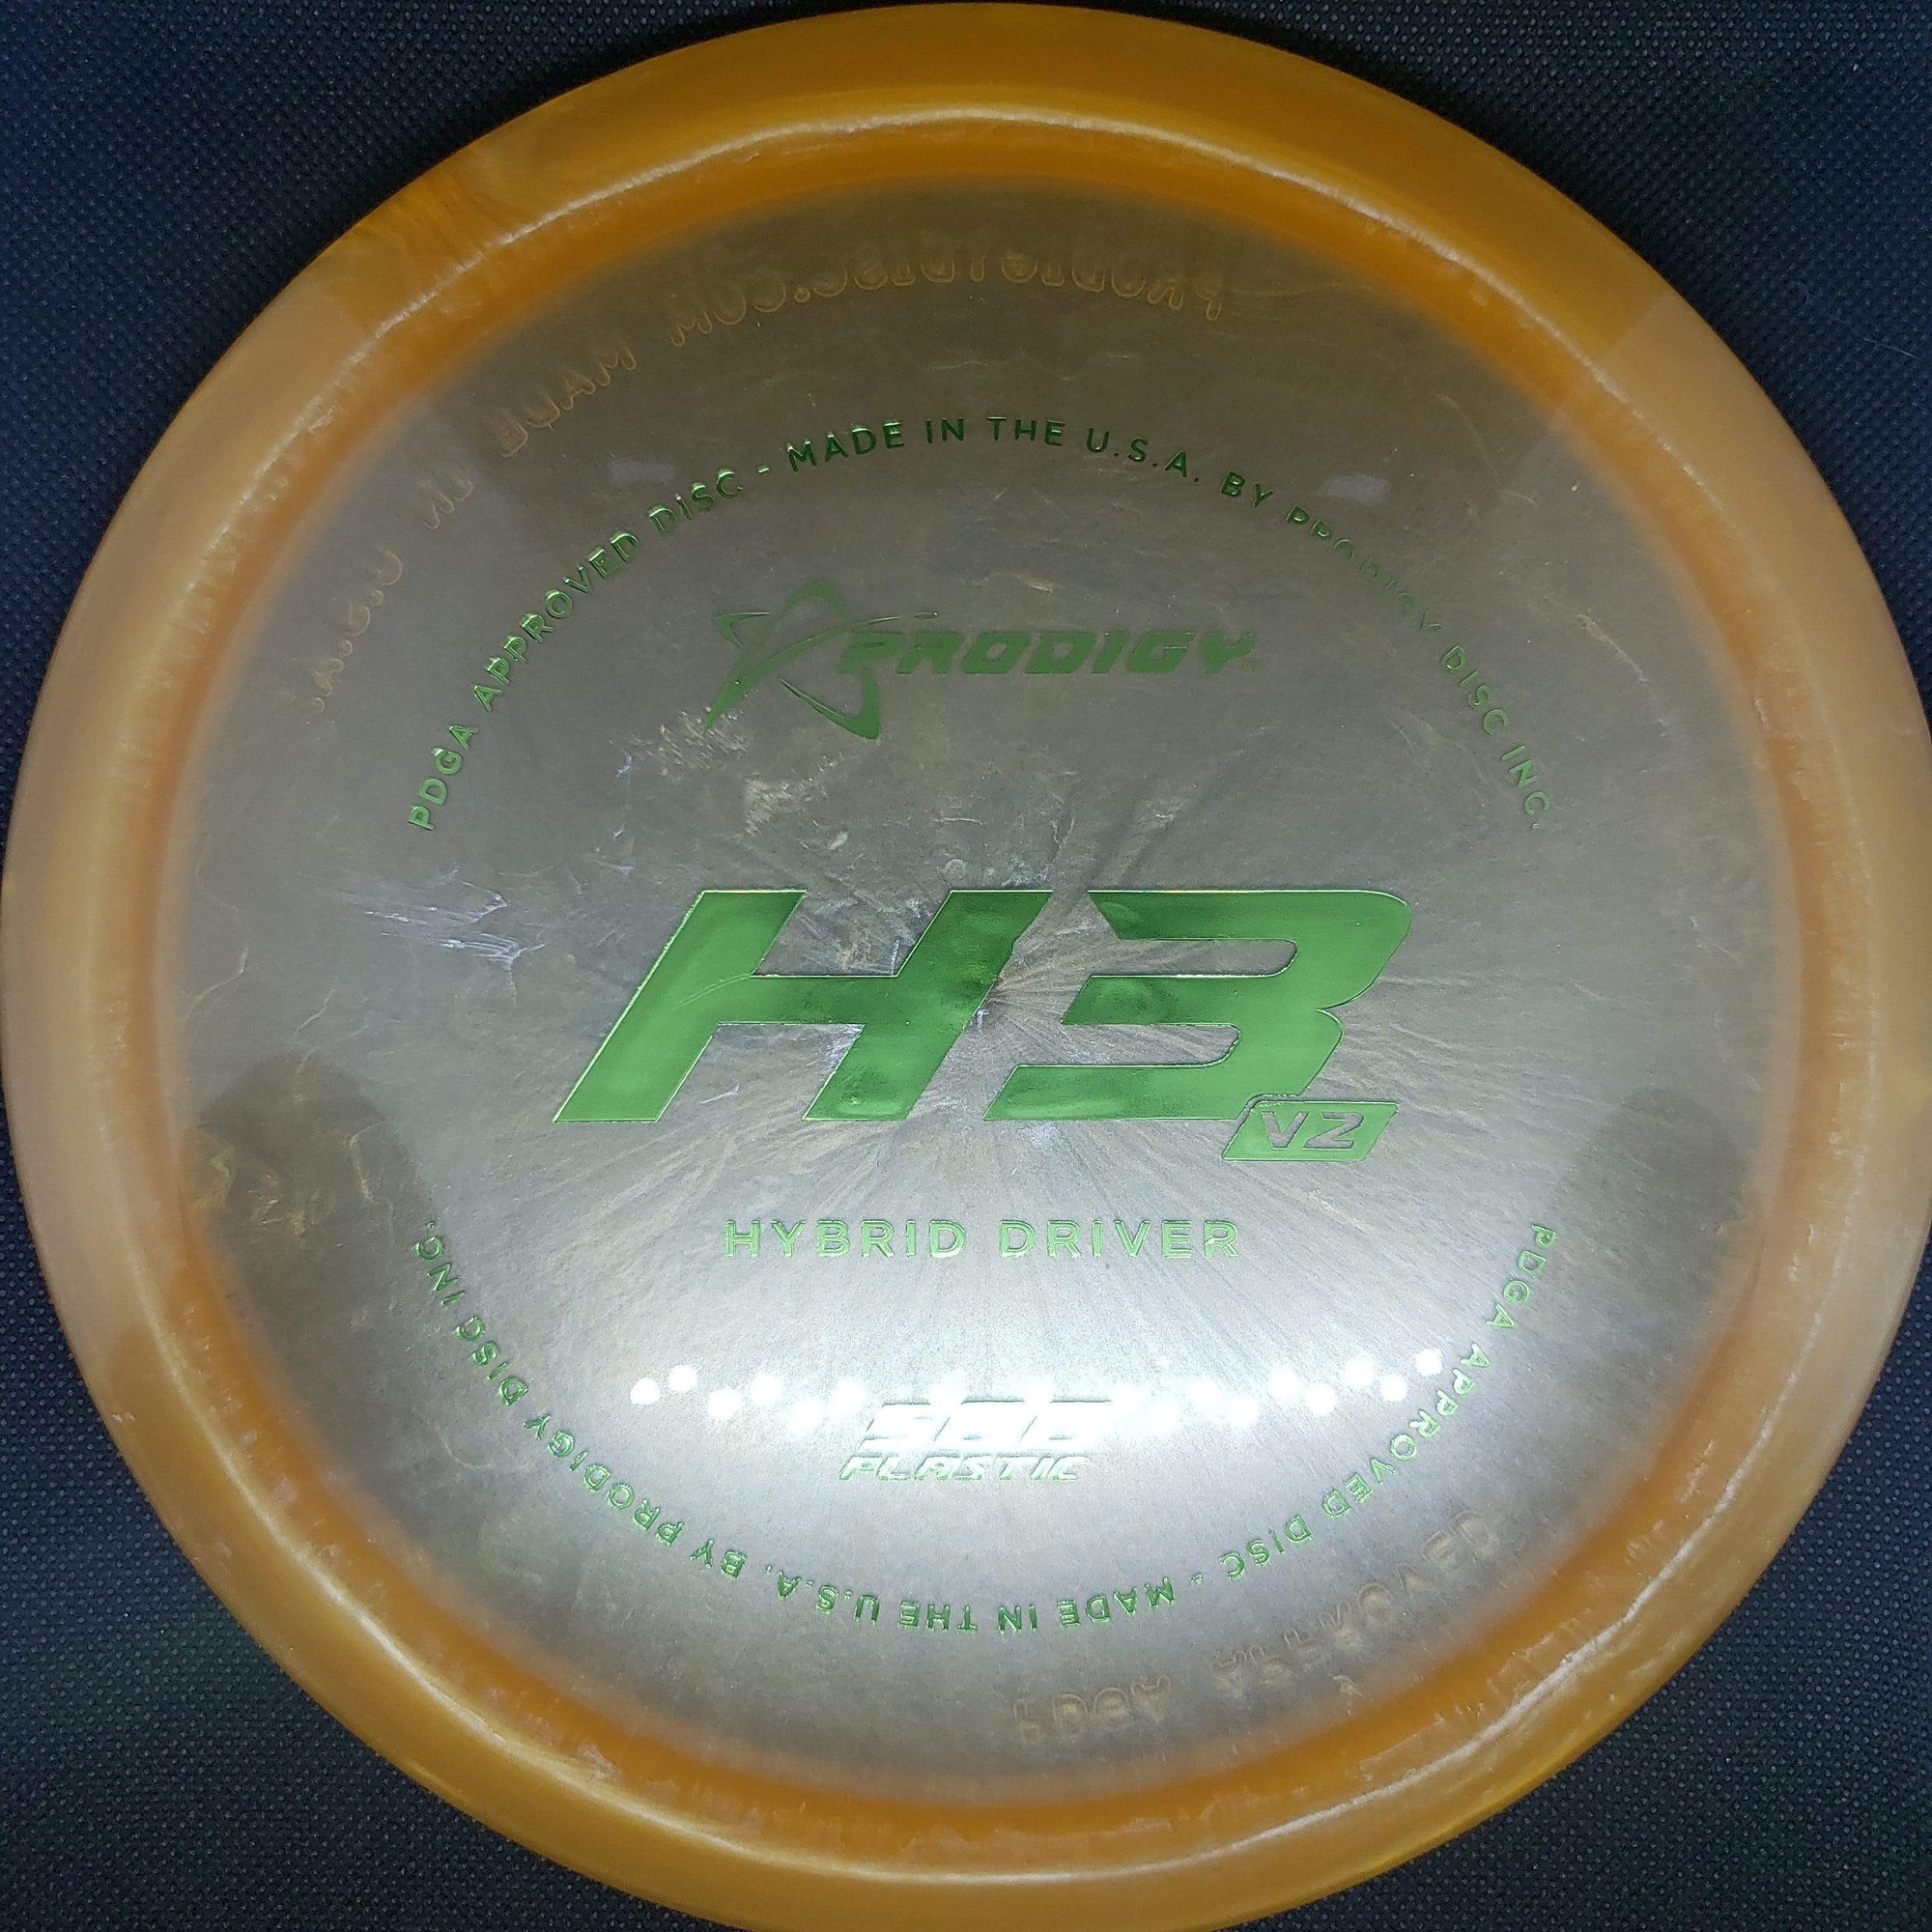 Prodigy Distance Driver Orange Green Stamp 174g H3v2 500 Plastic